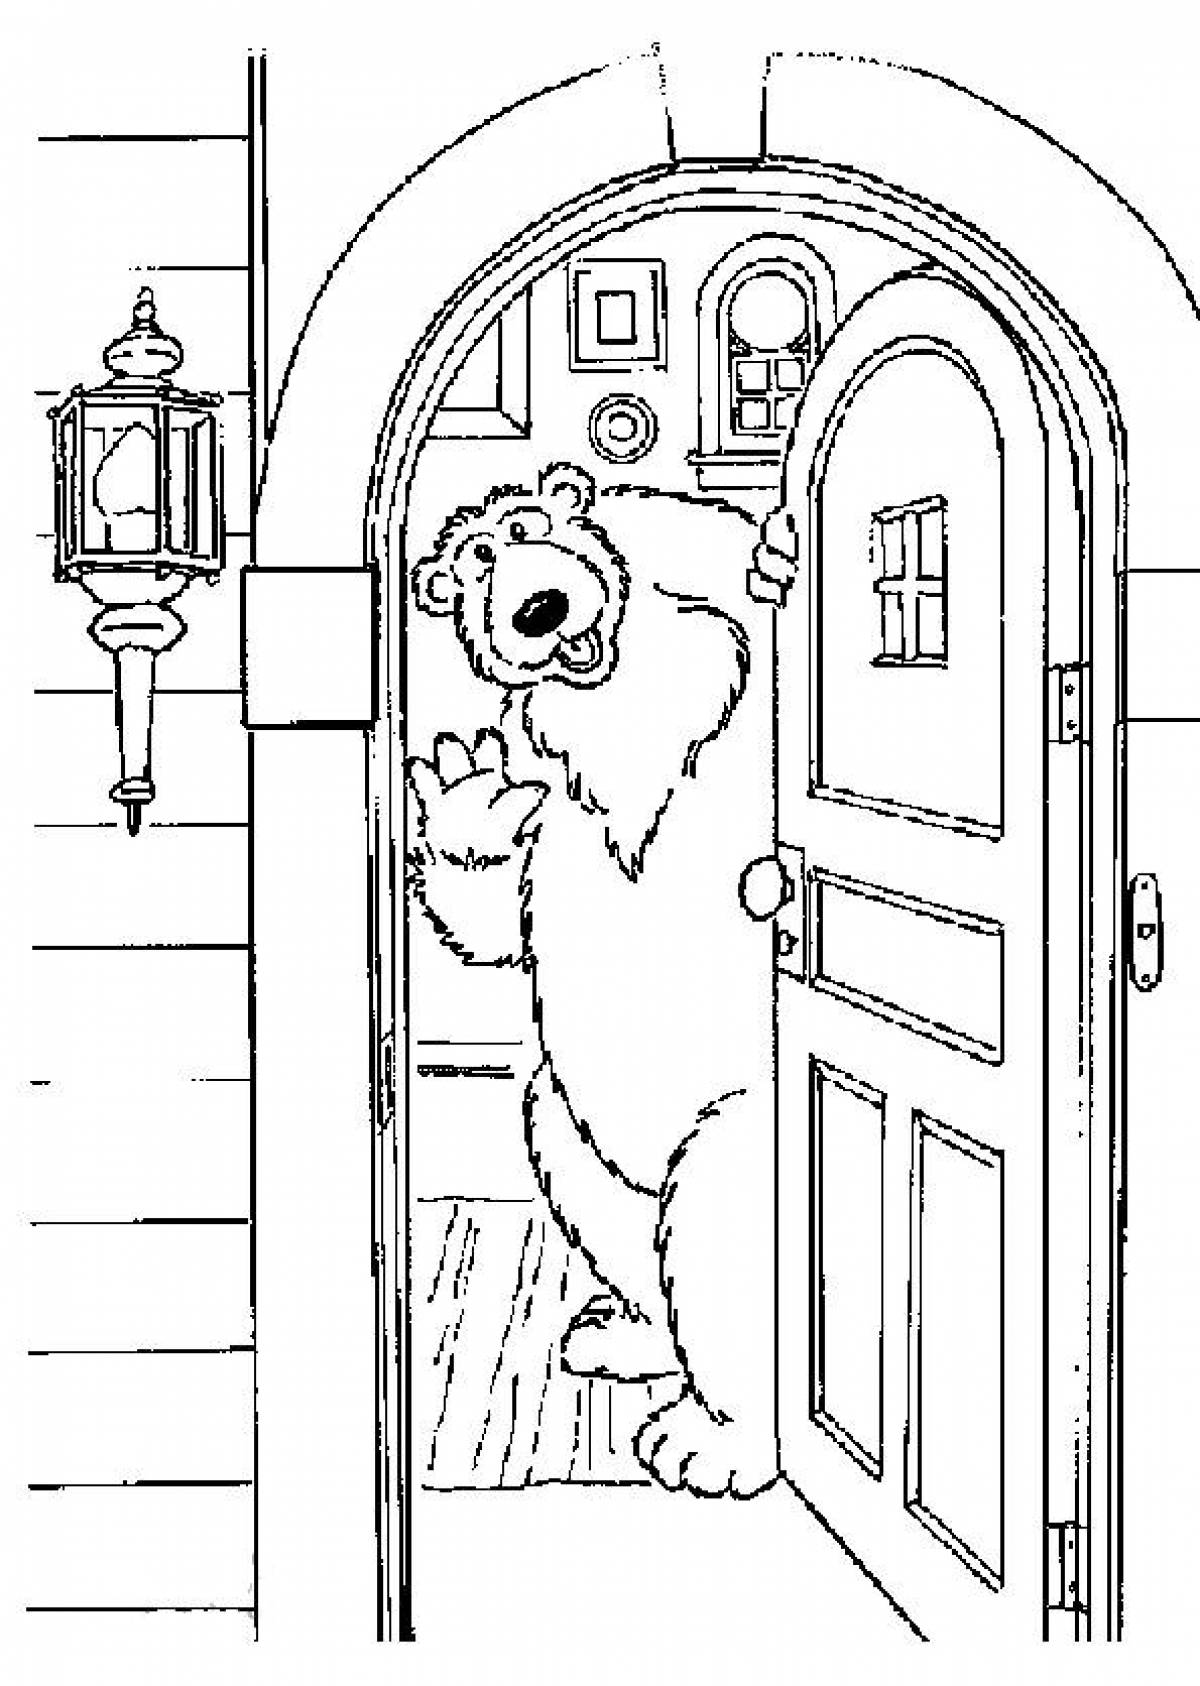 Door with a bear